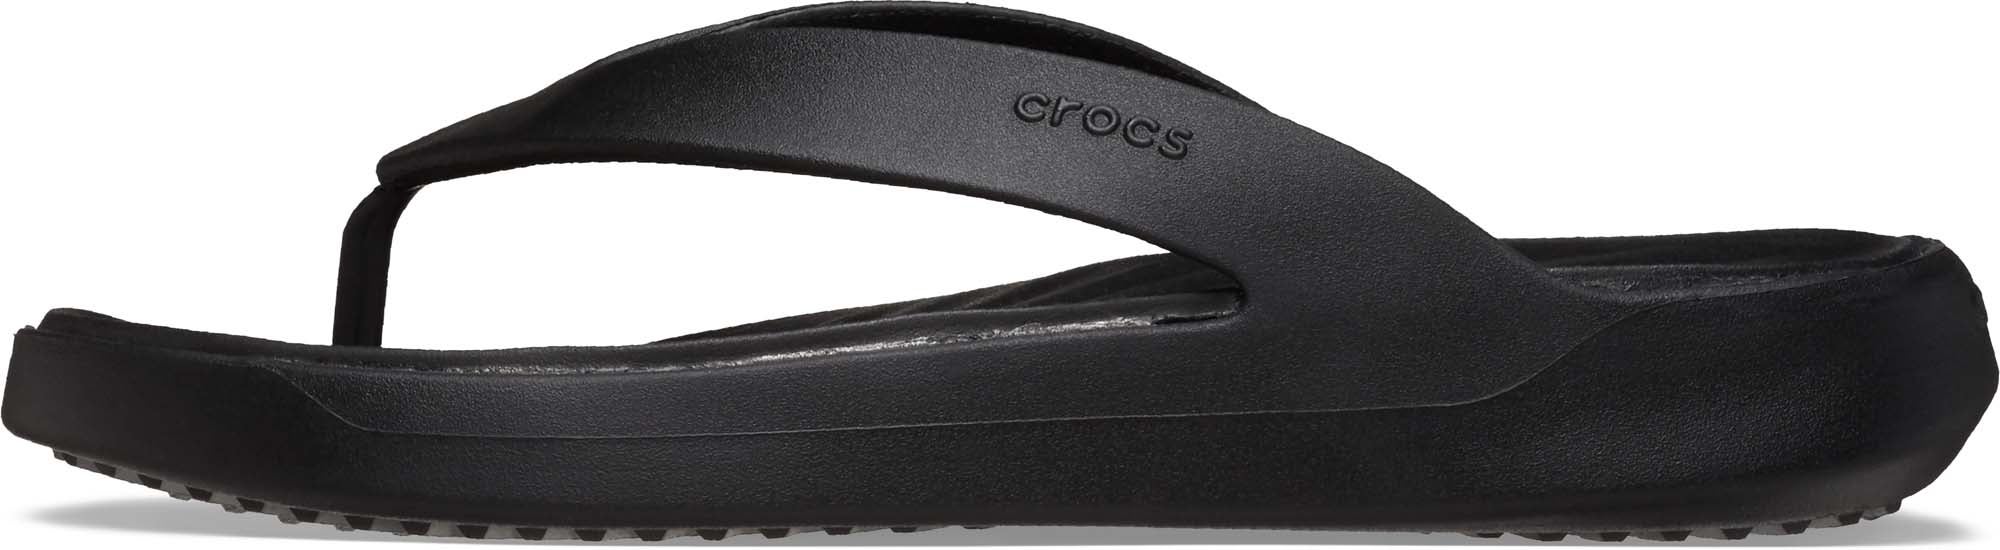 Crocs Flip Black